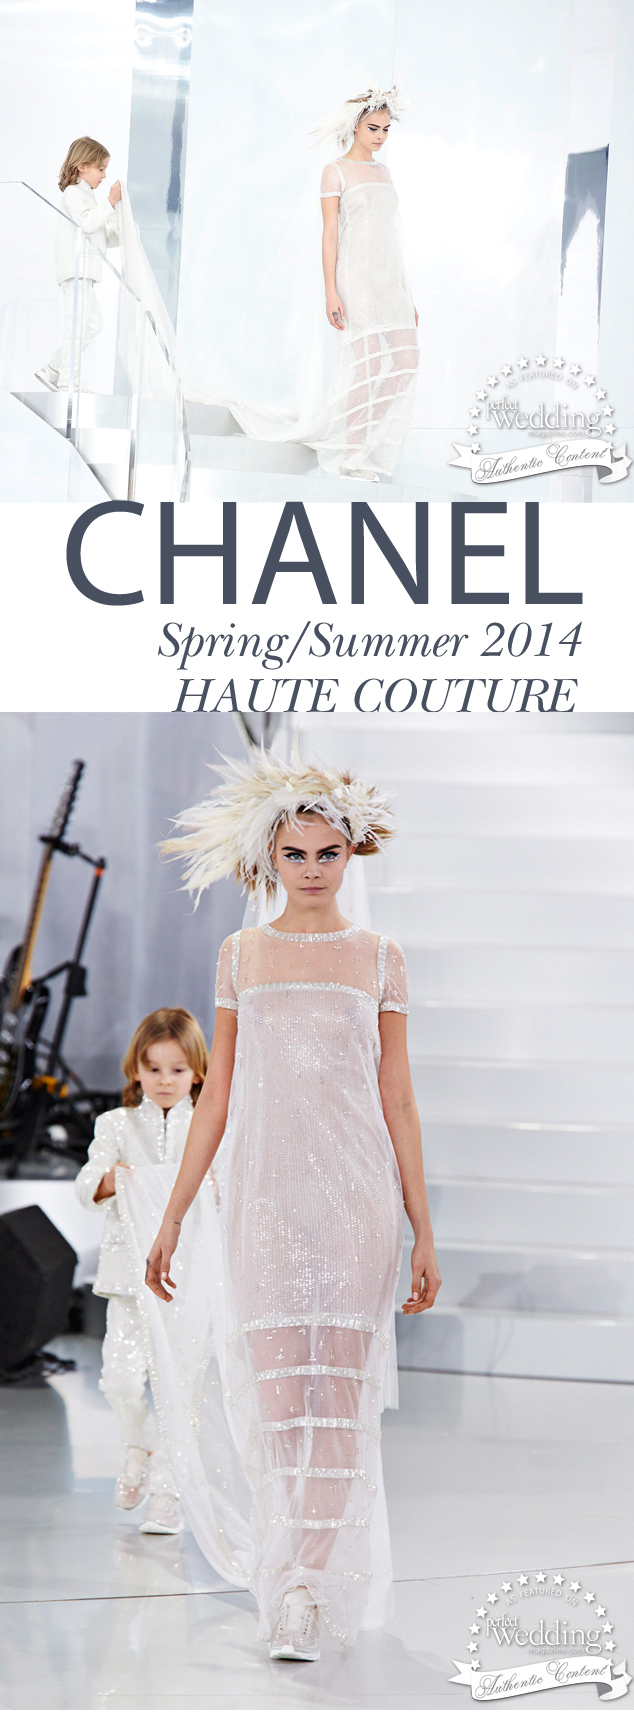 Chanel Spring Summer 2014 Haute Couture, Perfect Wedding magazine, Chanel Bride